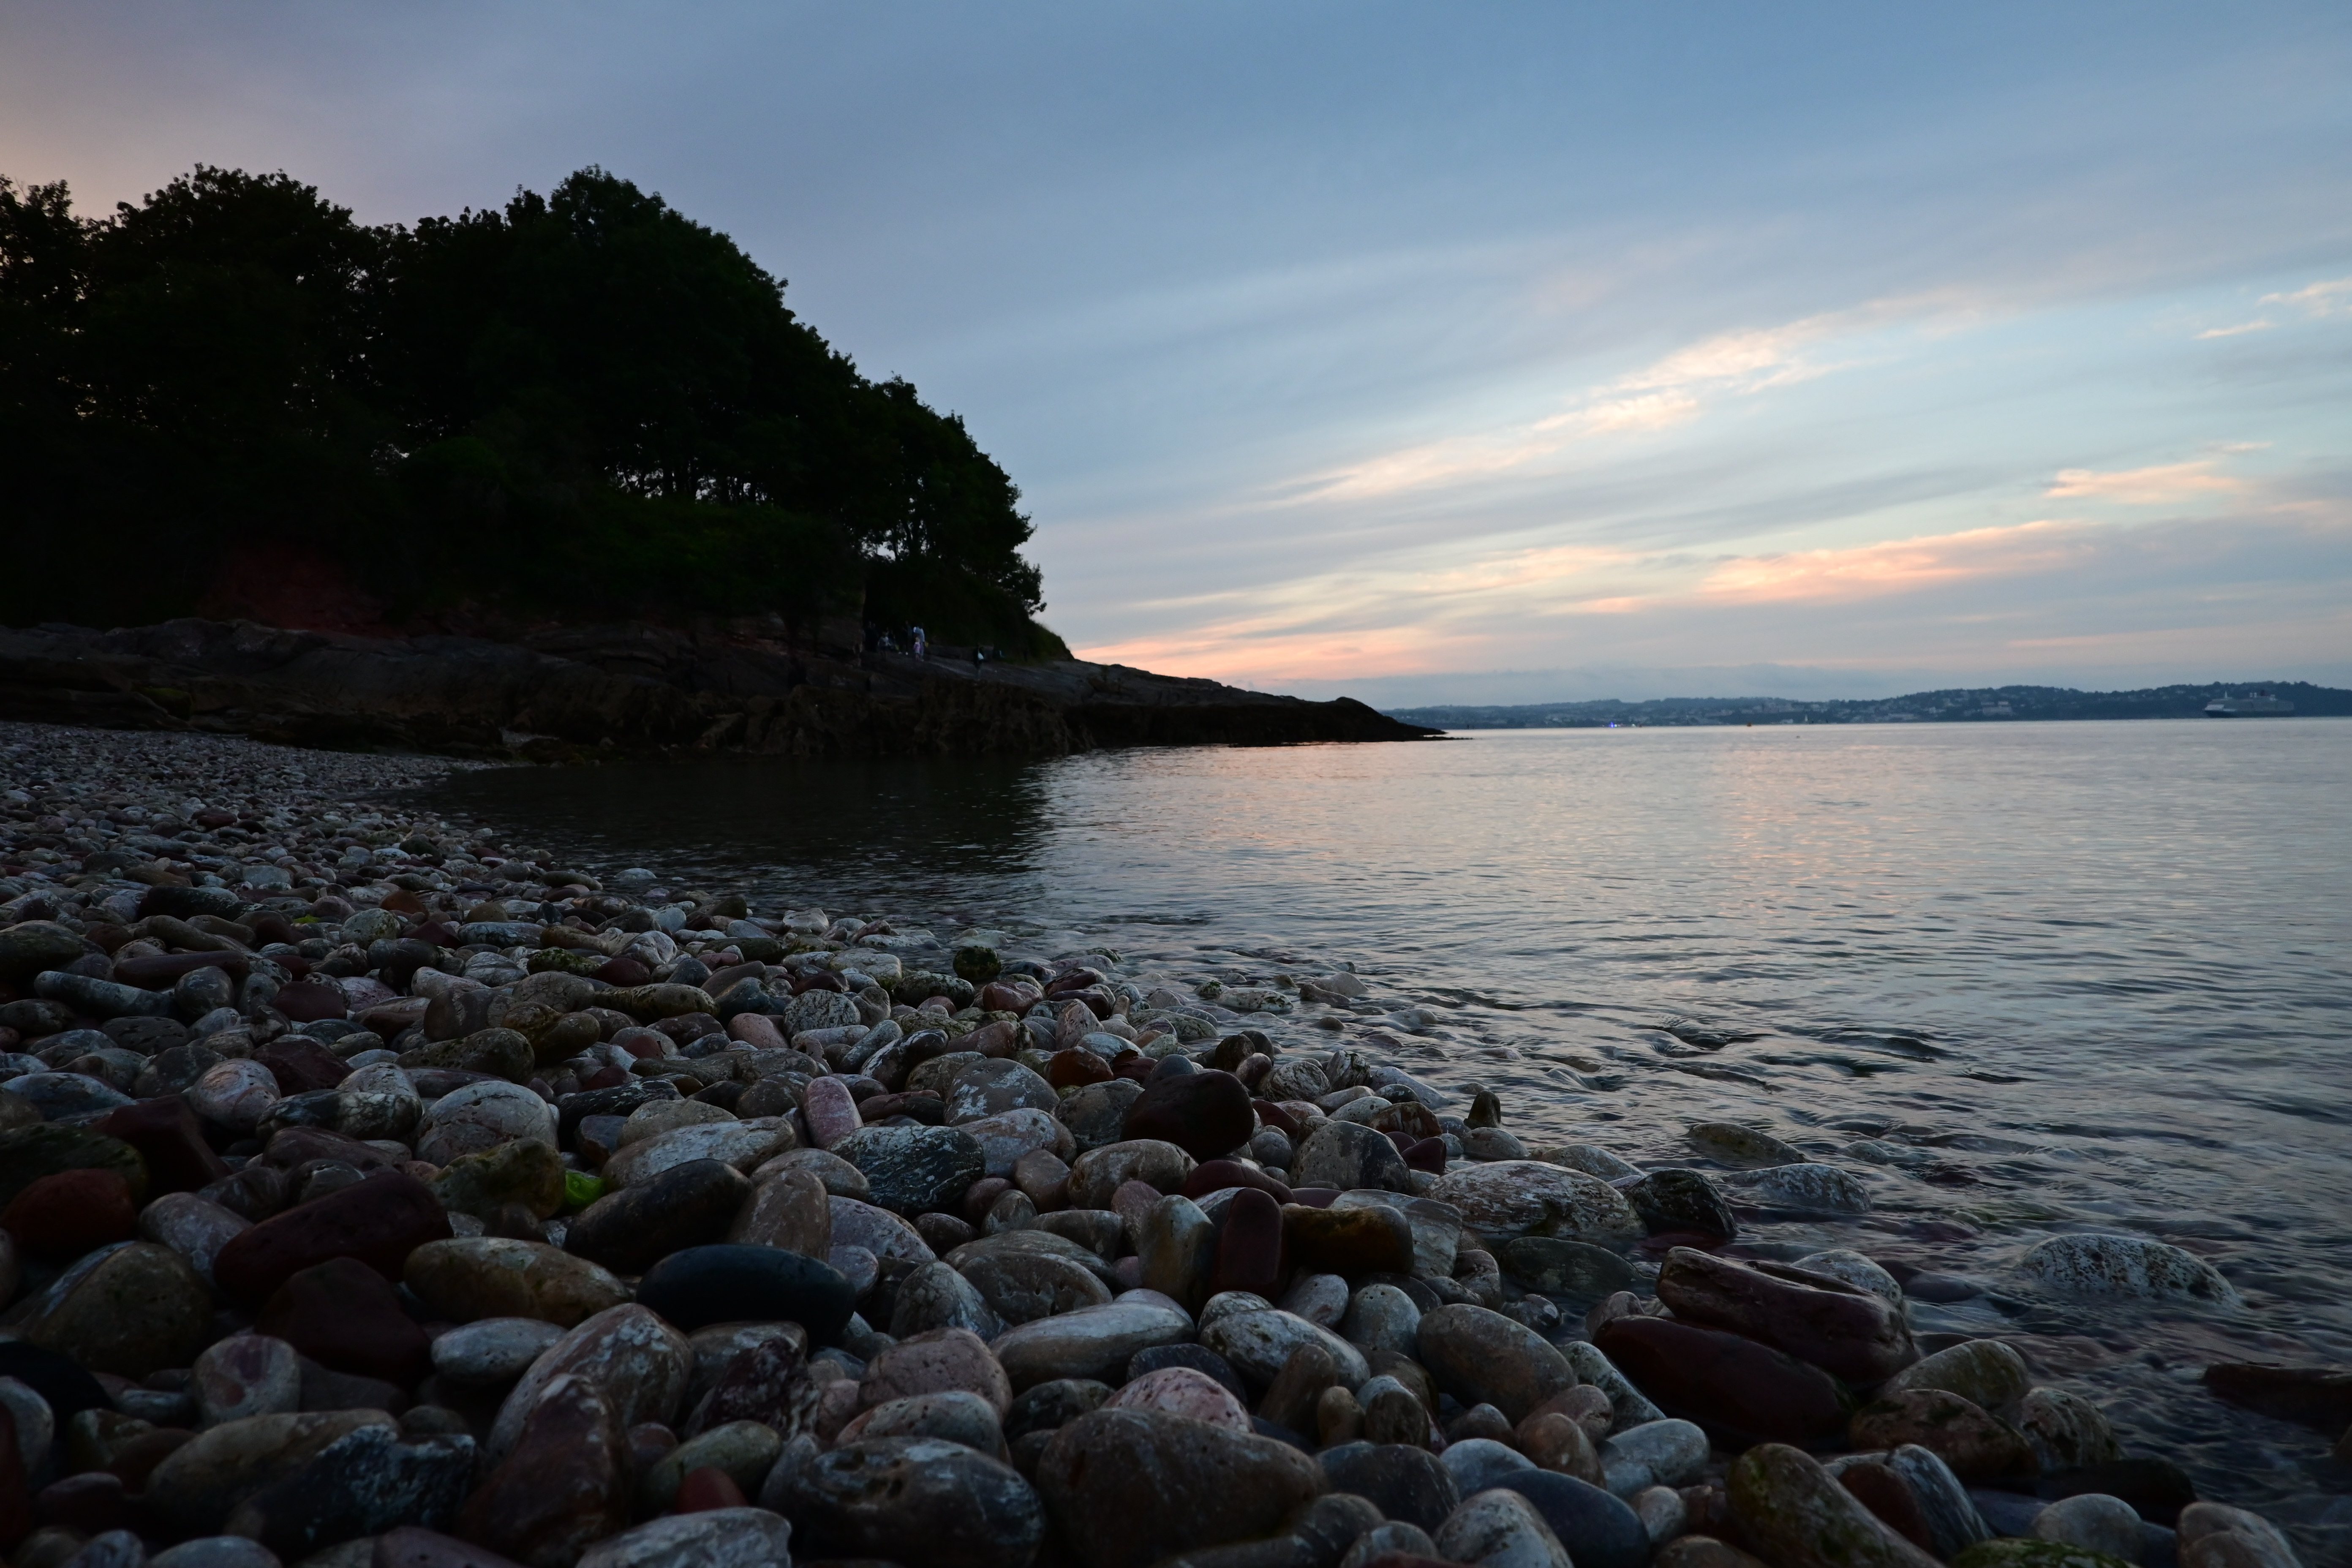 A rocky bay at dusk